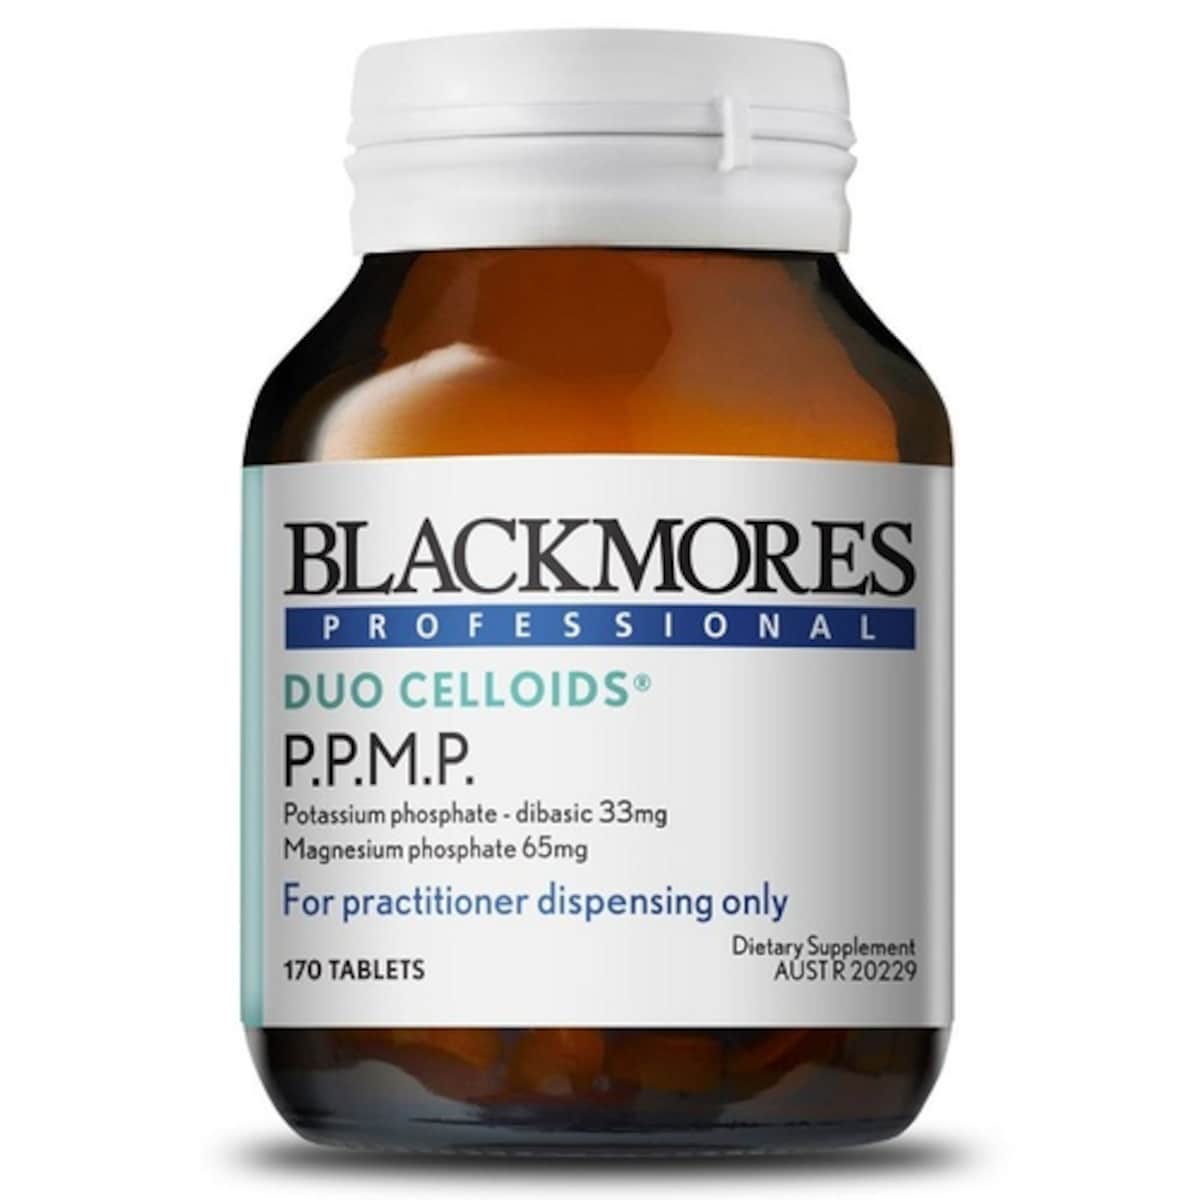 Blackmores Professional P.P.M.P 170 Tablets